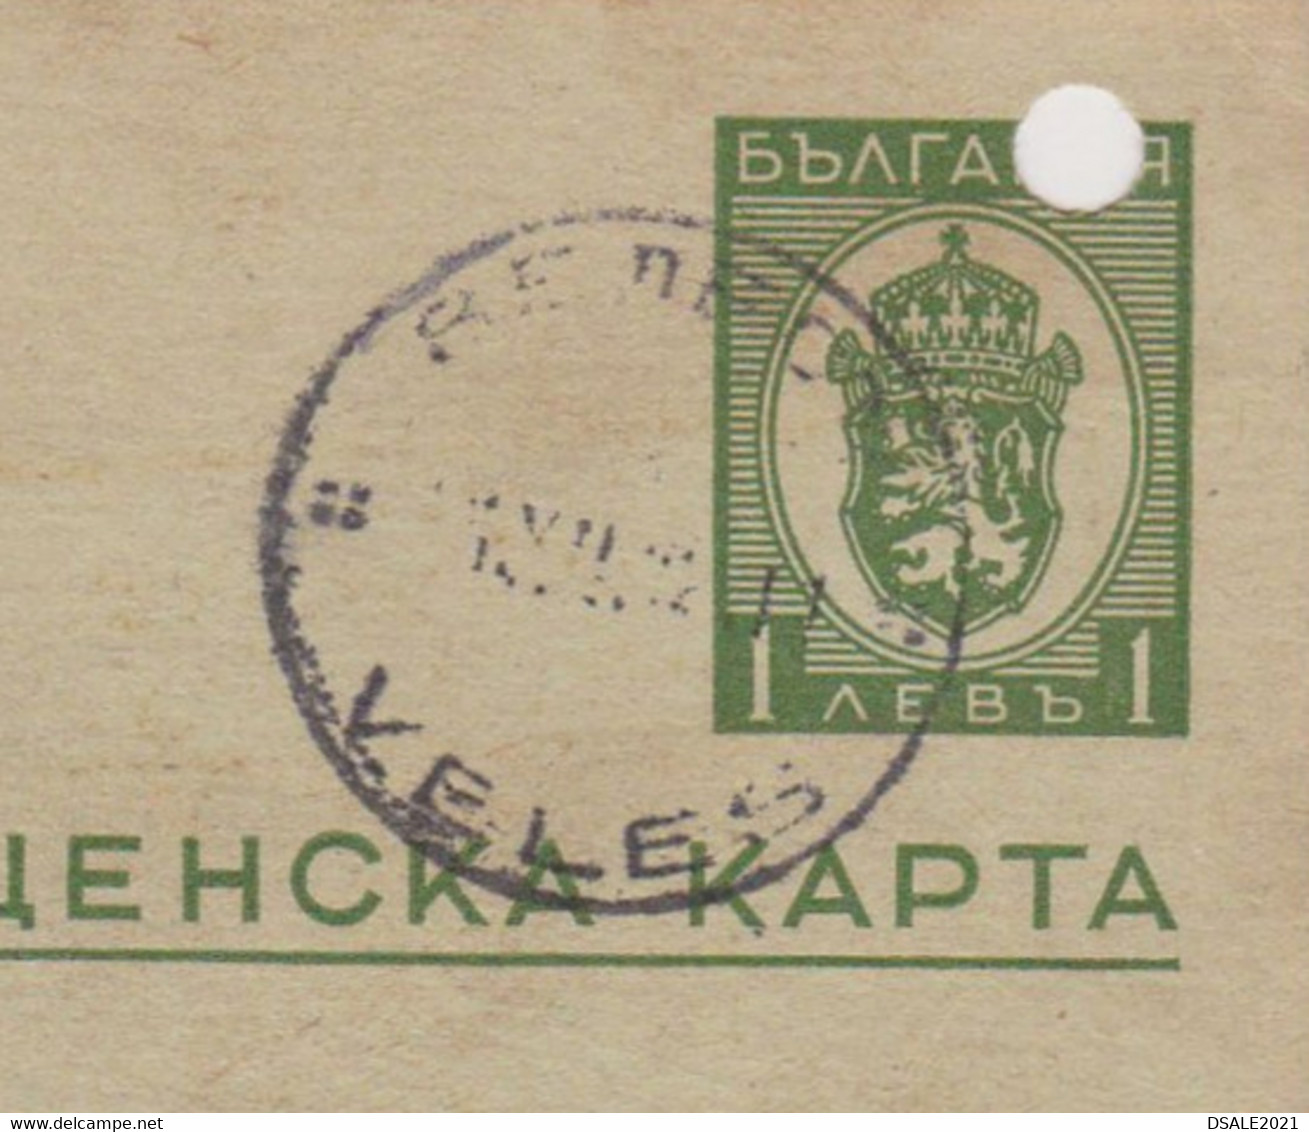 Bulgaria Bulgarie Bulgarije 1942-ww2 Entier Postal Stationery Card Bulgarian Office N. Macedonia VELES Cachet (65955) - Guerra